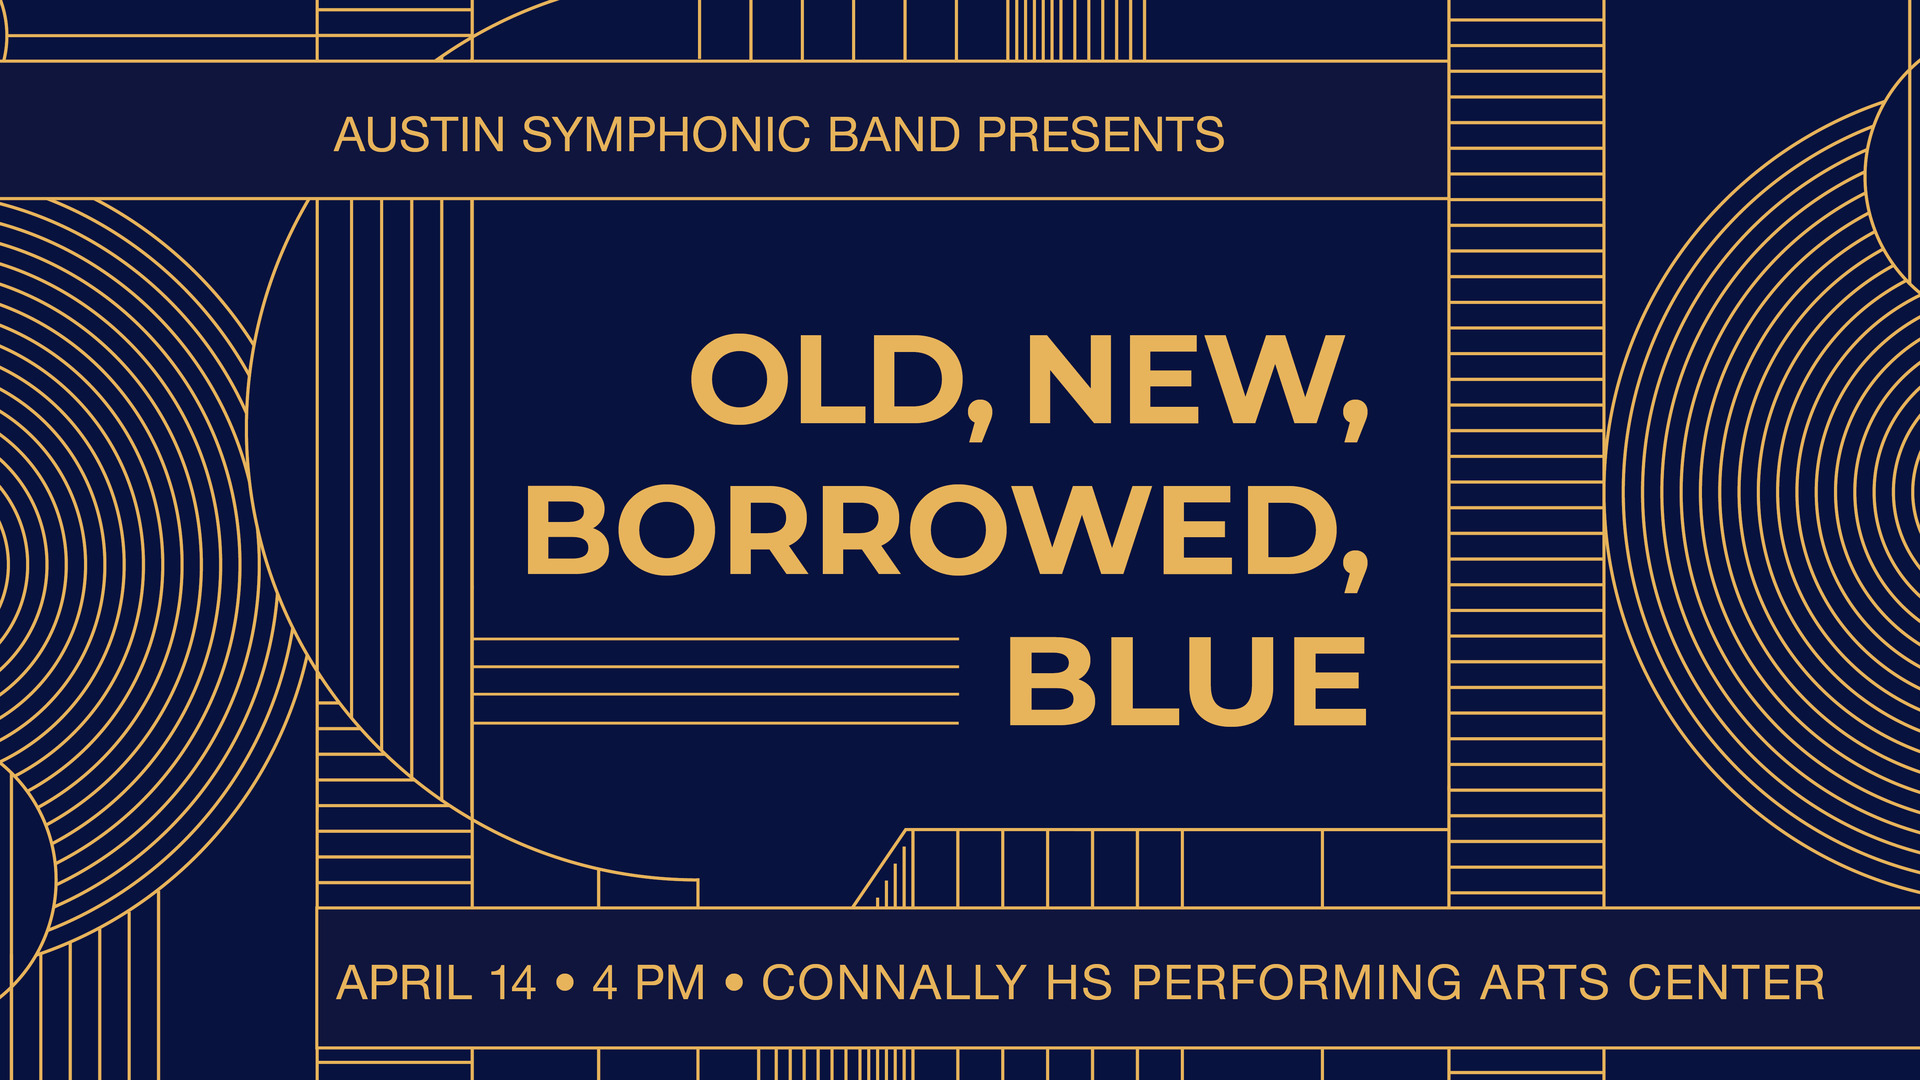 Austin Symphonic Band: "Old, New, Borrowed, Blue", Austin, Texas, United States